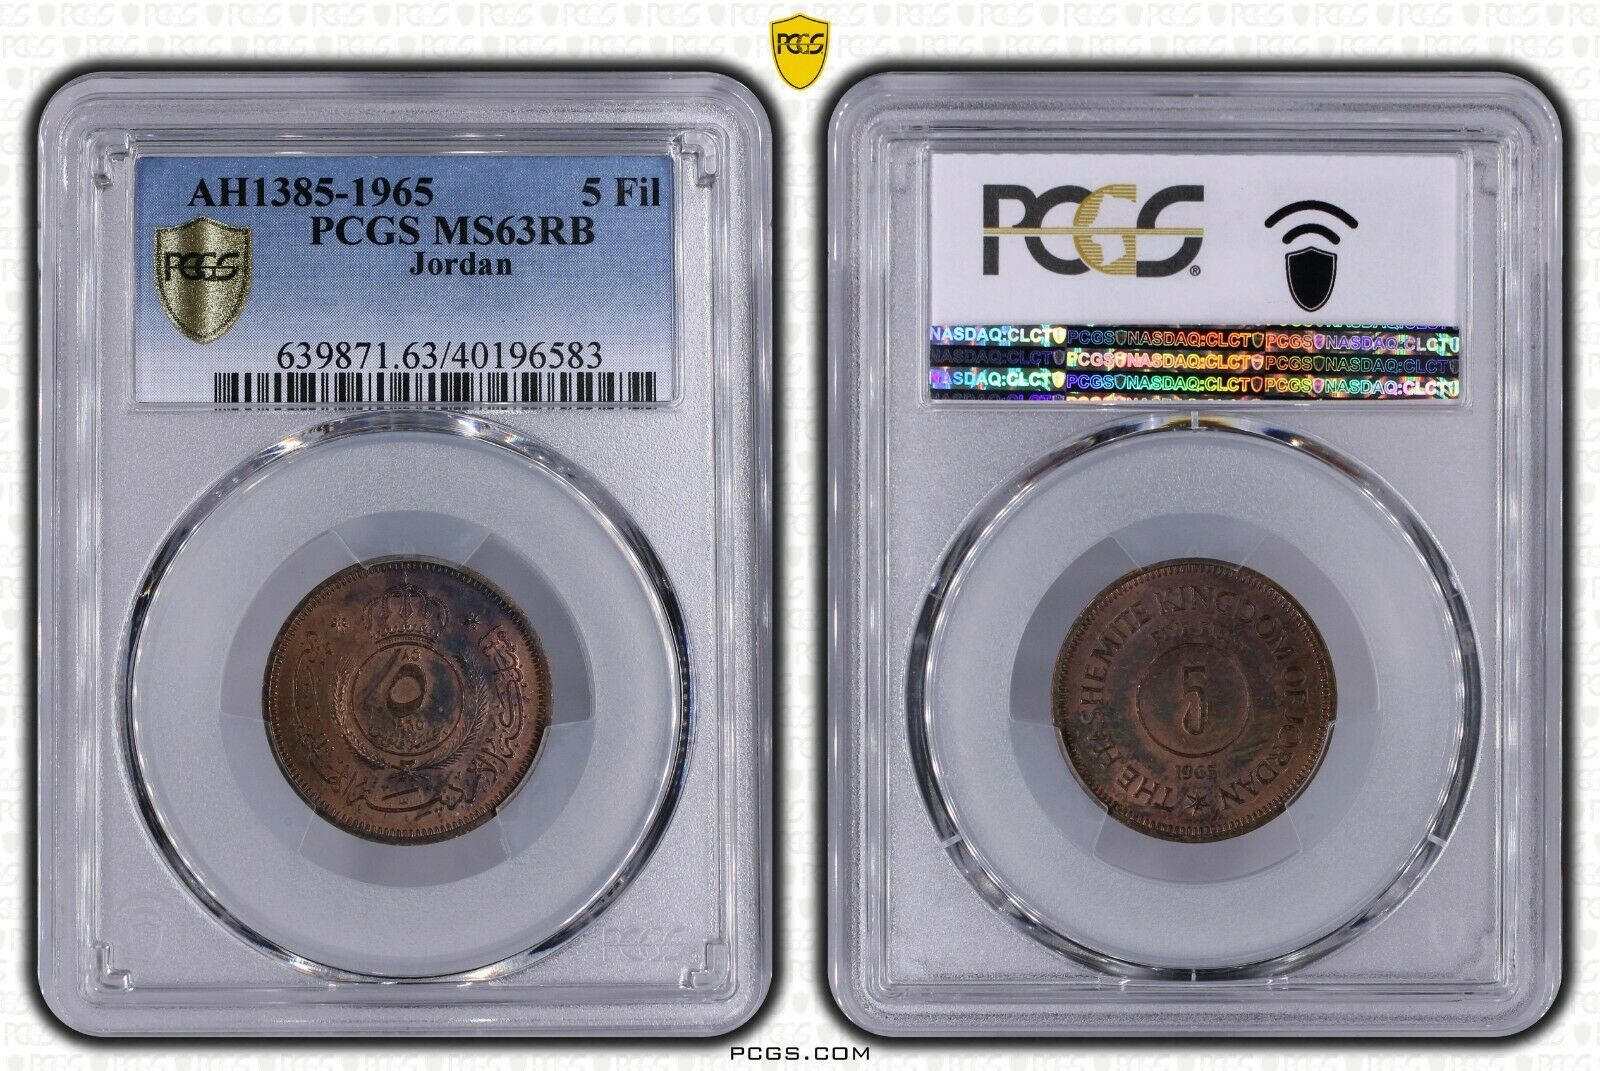 Jordan 5 Fils Unc Coin 1965 Ah1385 Year Km#9 Pcgs Grading Ms63